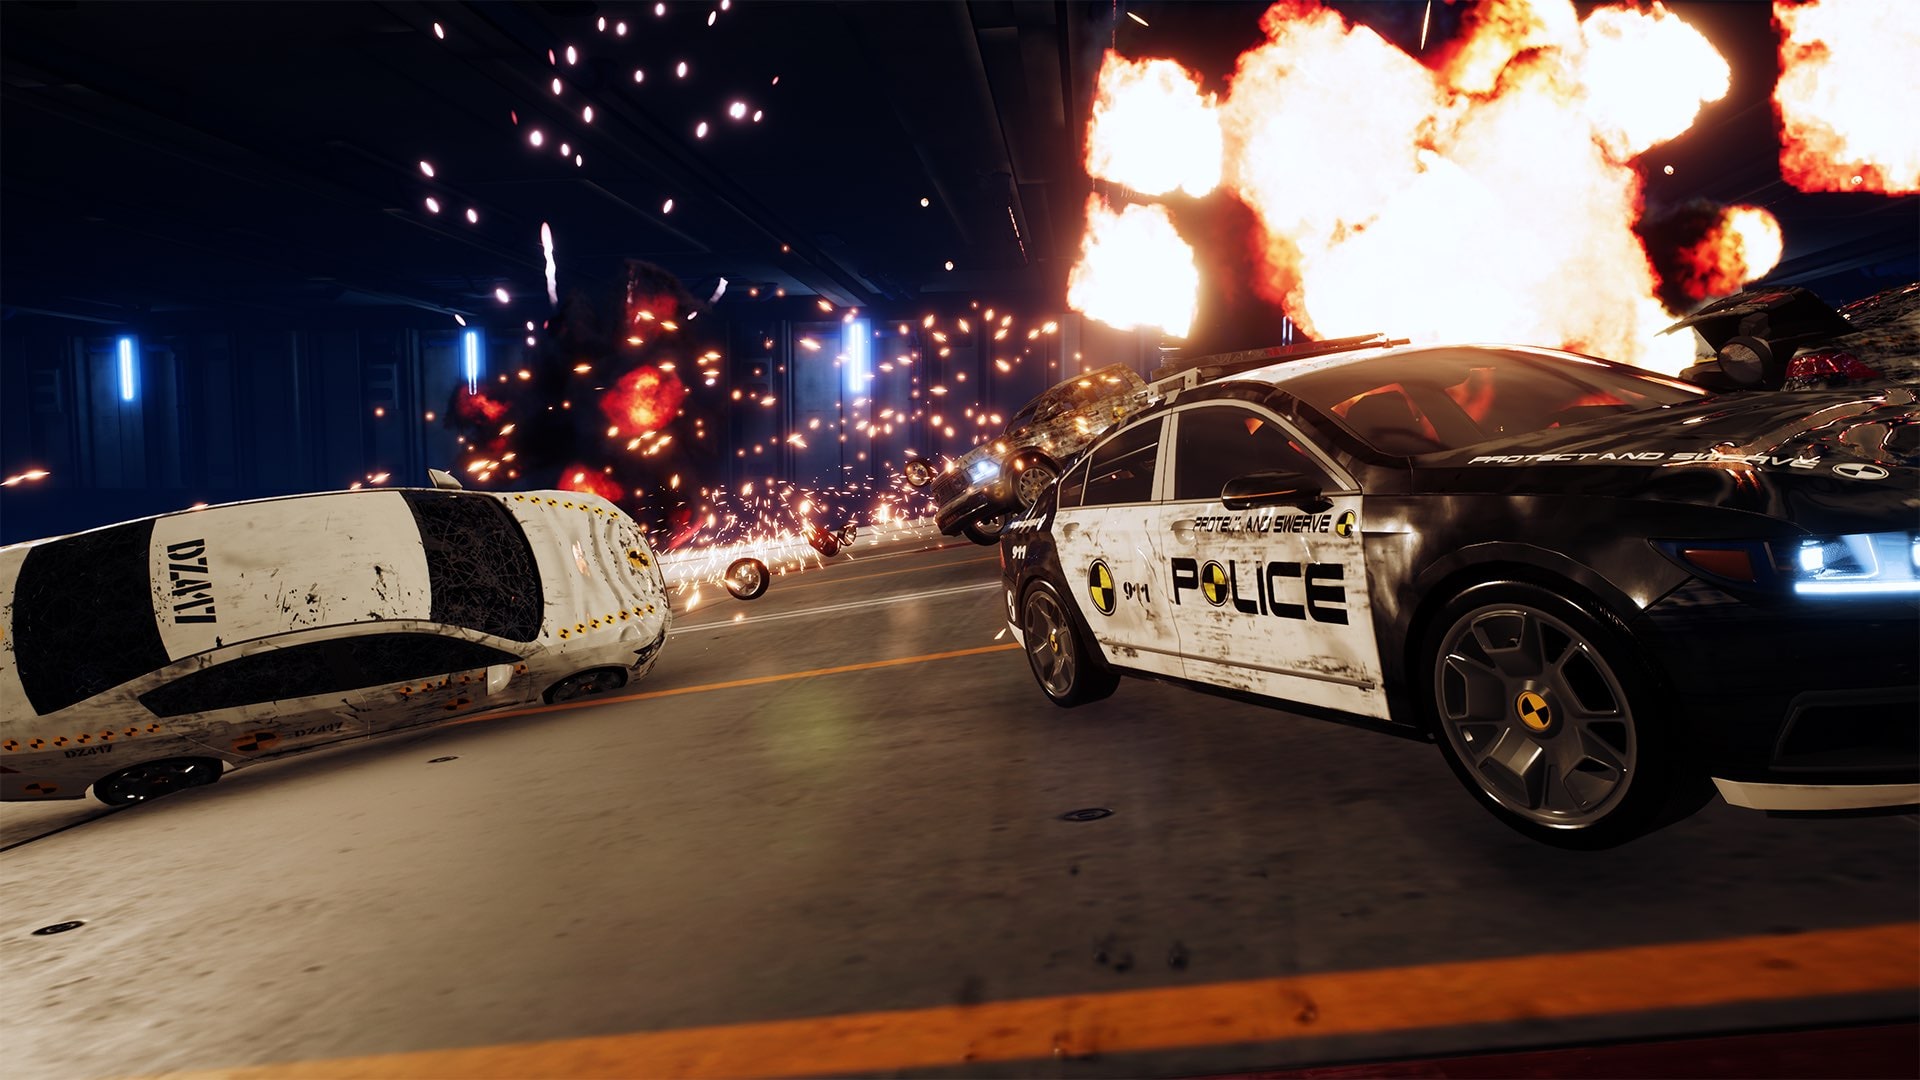 Dangerous Driving - PS4 - Game Games - Loja de Games Online